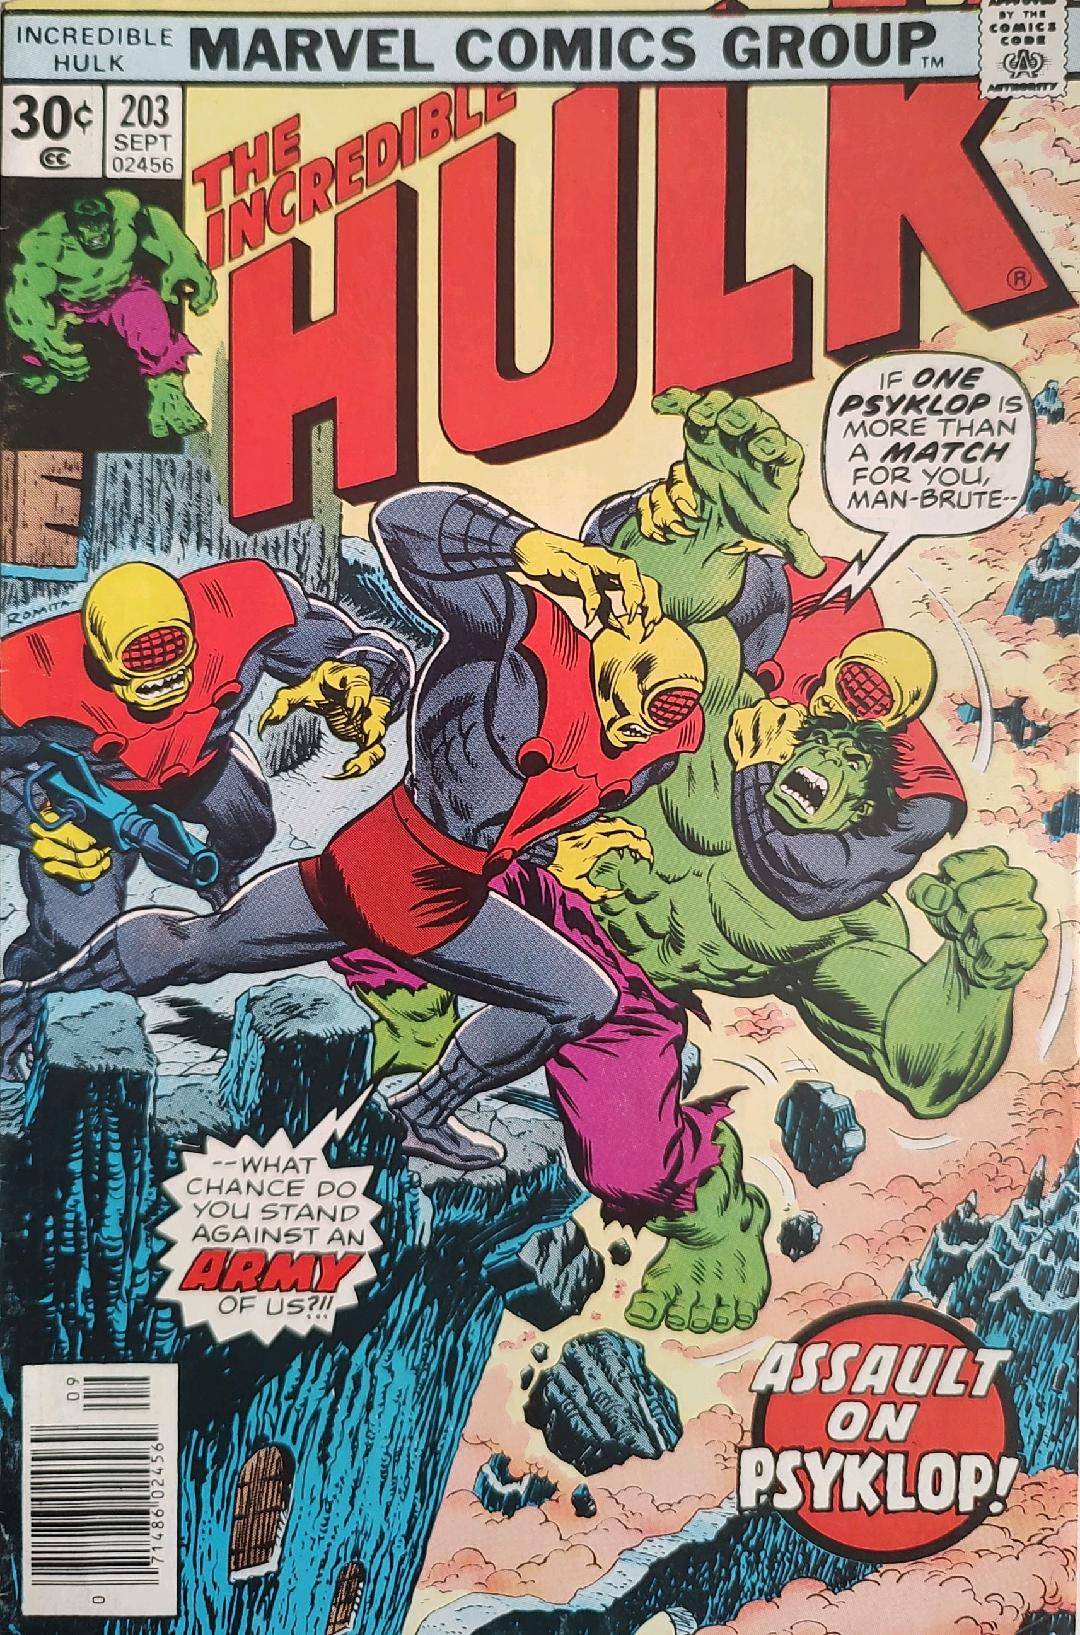 The Incredible Hulk #203 Comic Book Cover